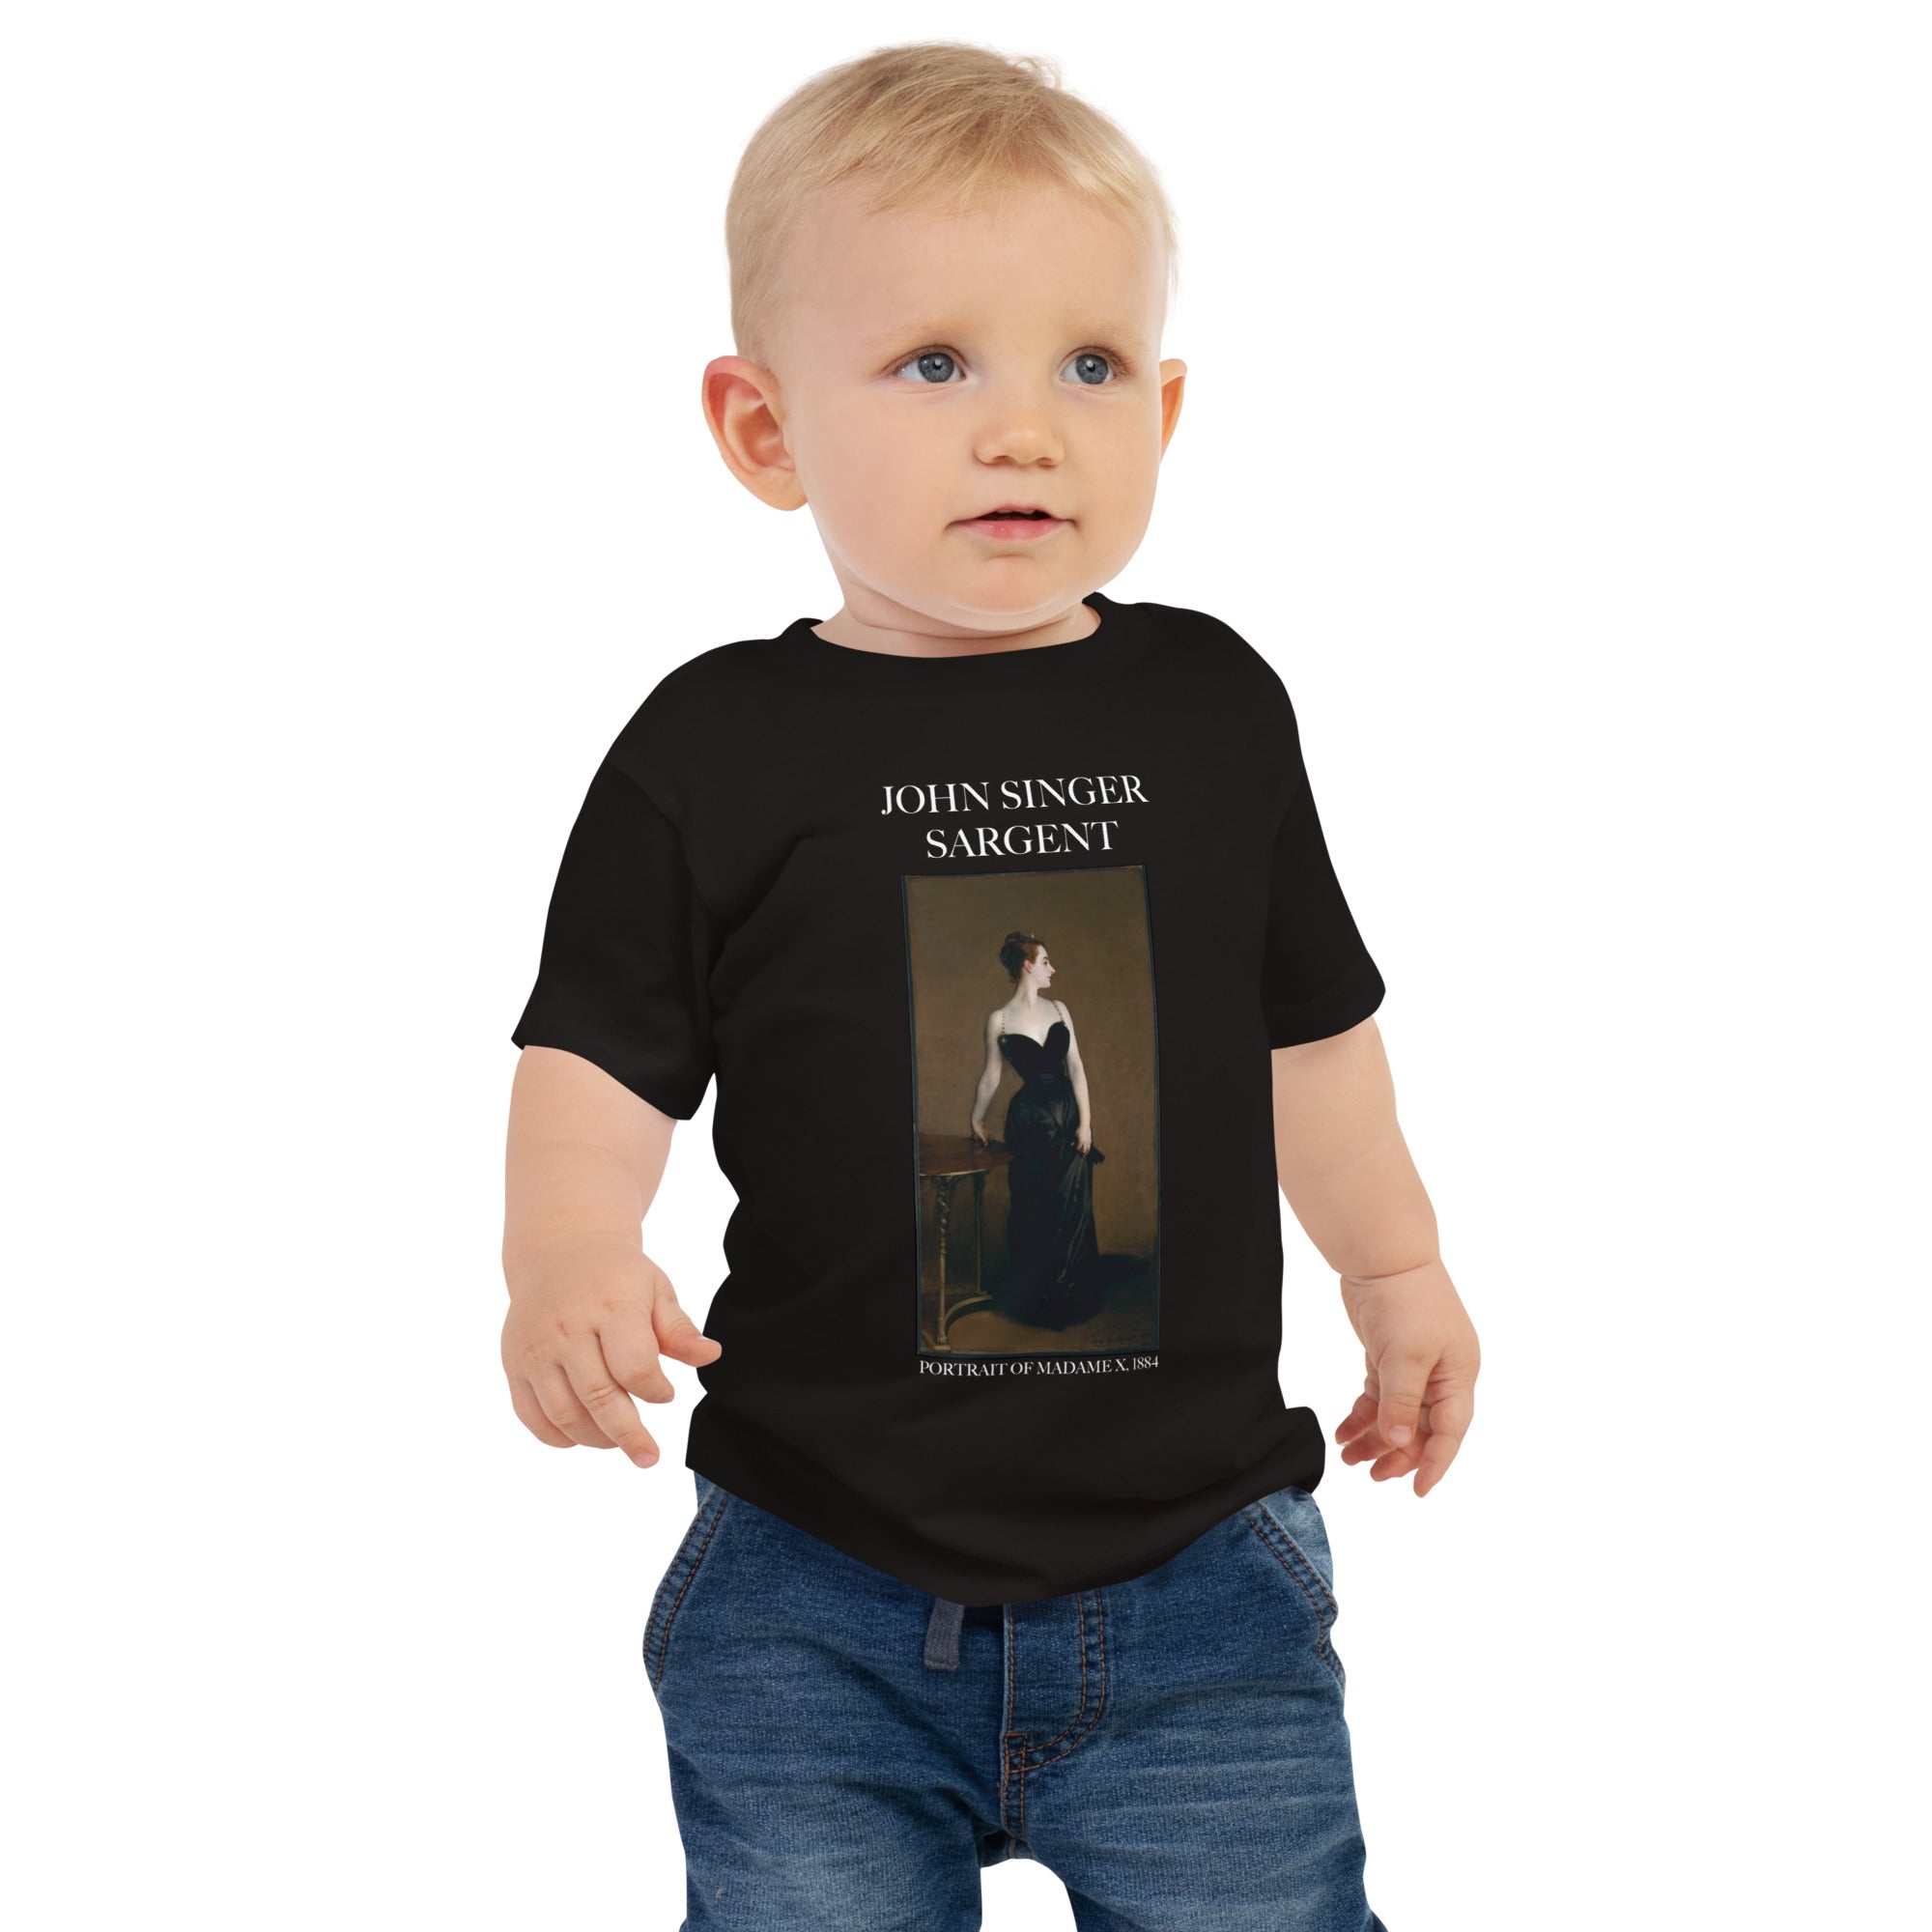 John Singer Sargent 'Portrait of Madame X' Famous Painting Baby Staple T-Shirt | Premium Baby Art Tee